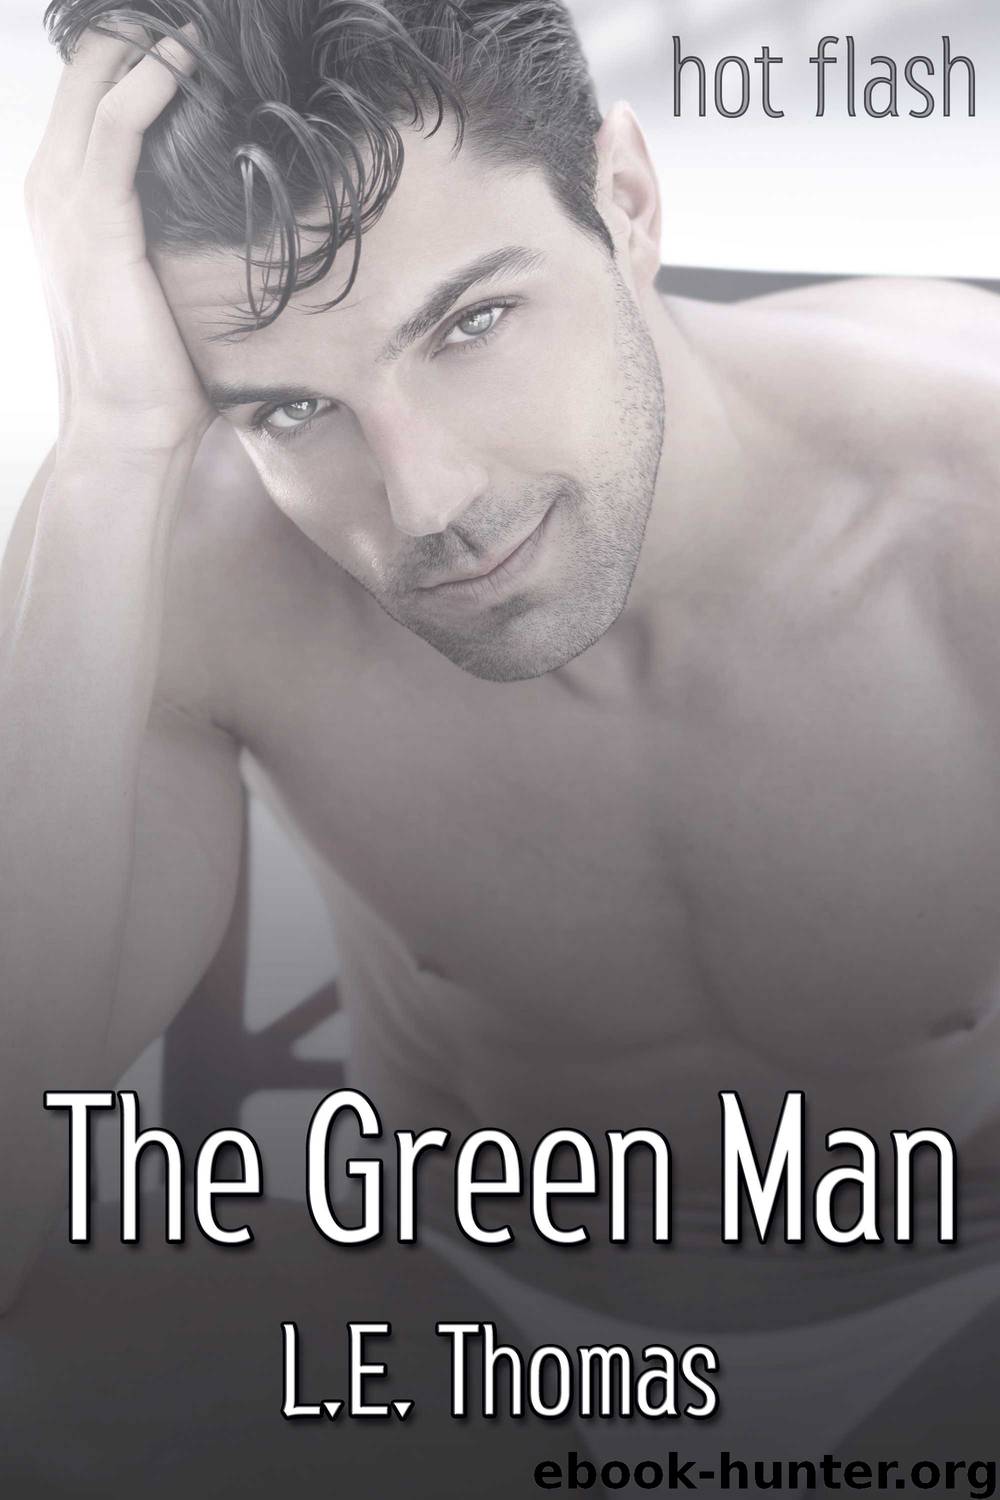 The Green Man by L.E. Thomas